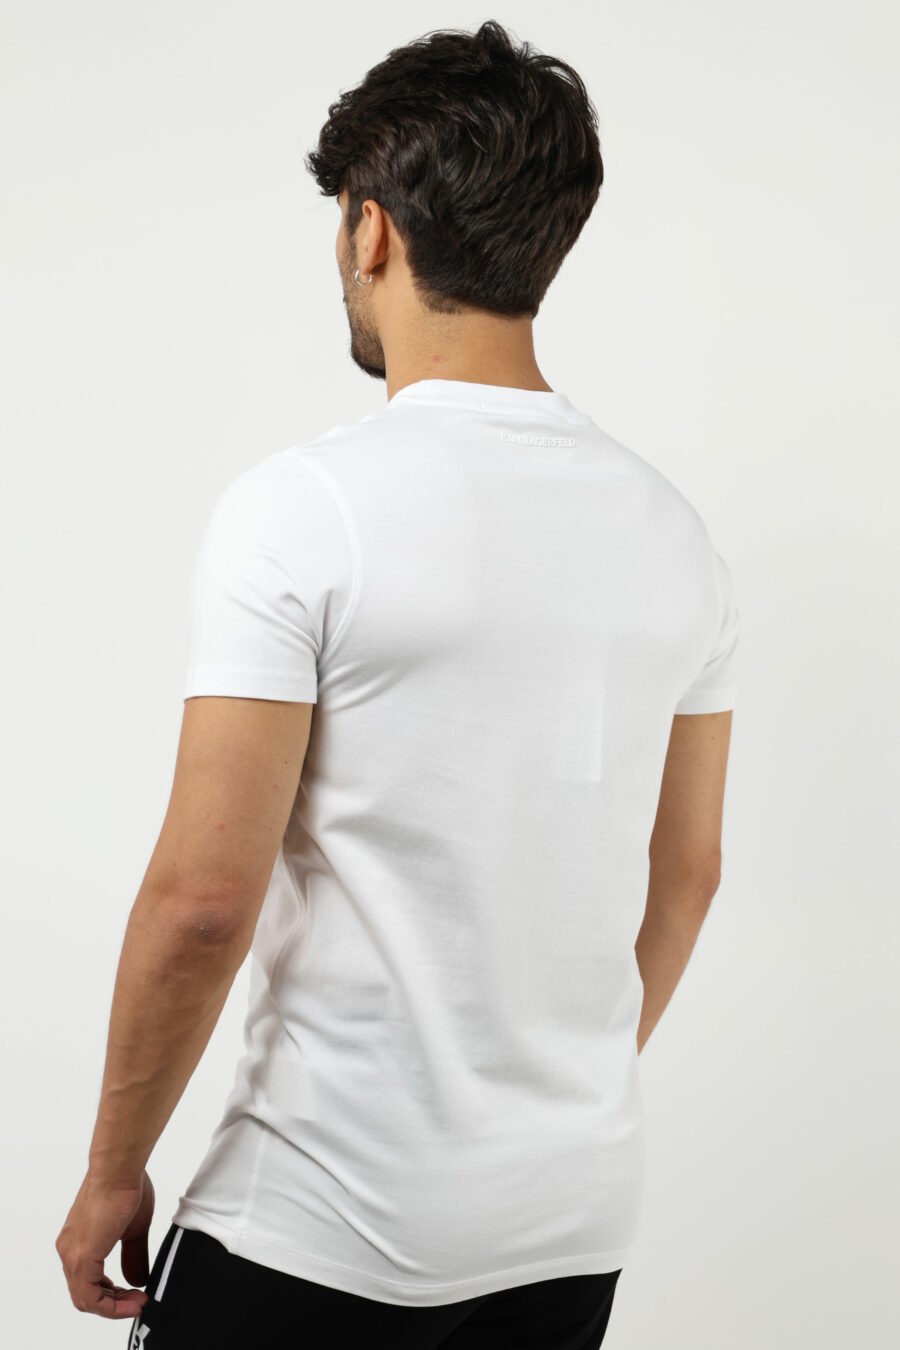 Camiseta blanca con maxilogo firma delineado "rue st guillaume" - 4062226958530 3